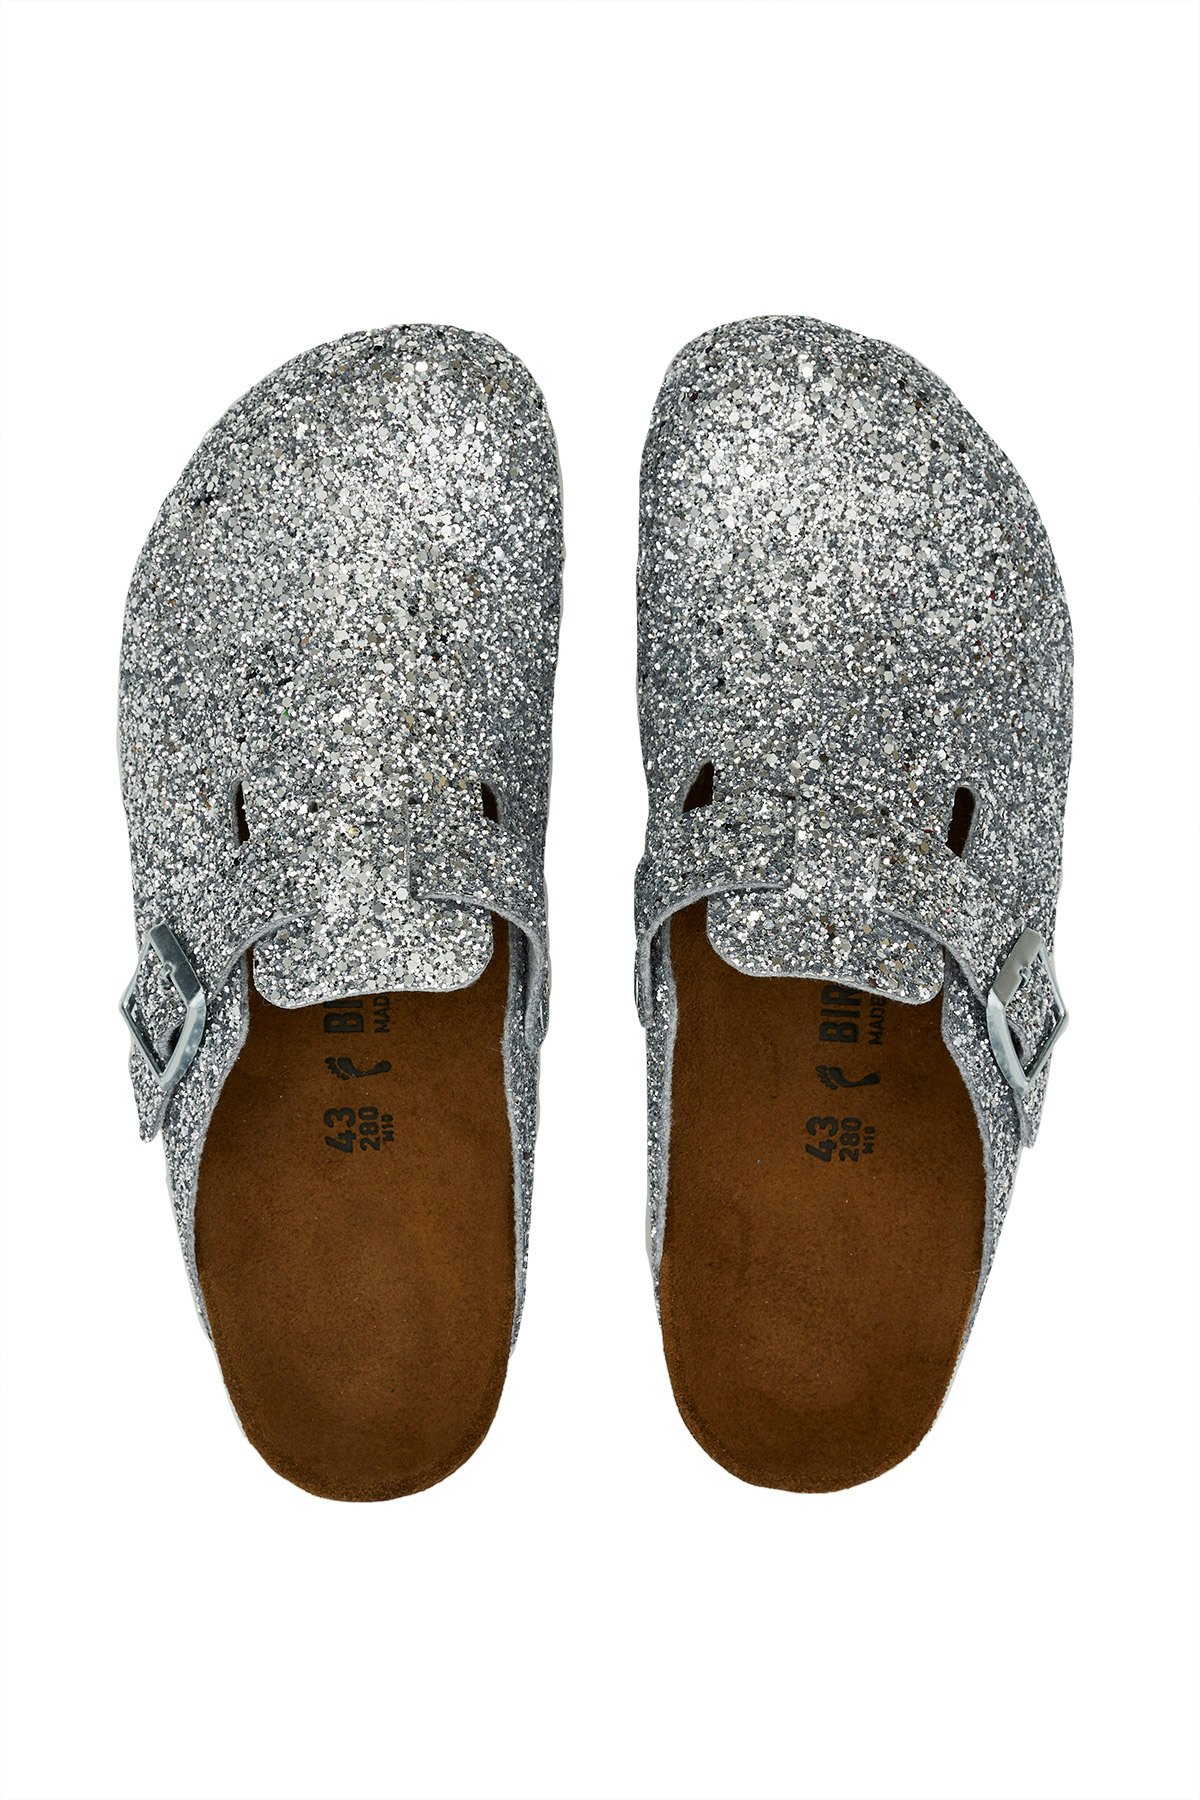 glitter birkenstock sandals